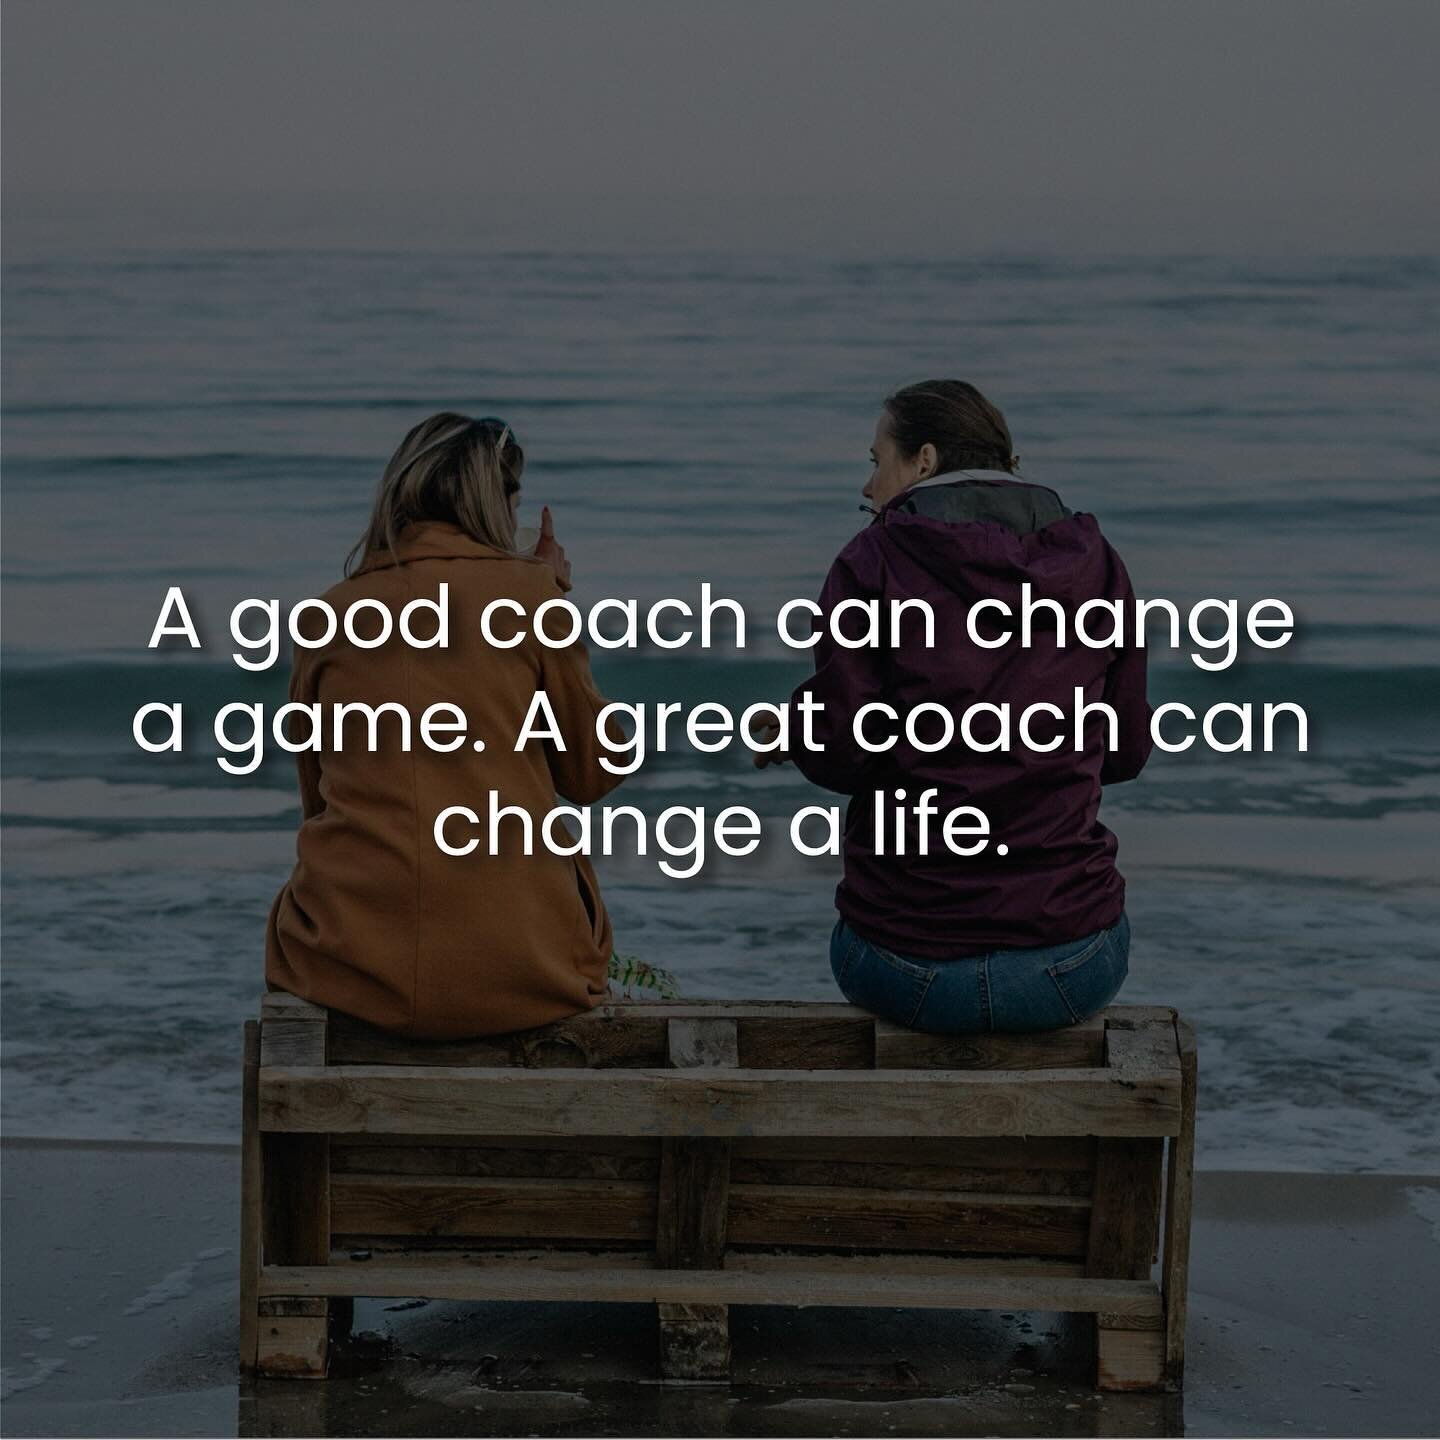 A good coach can change a game. A great coach can
change a life. #coachlife #coaching